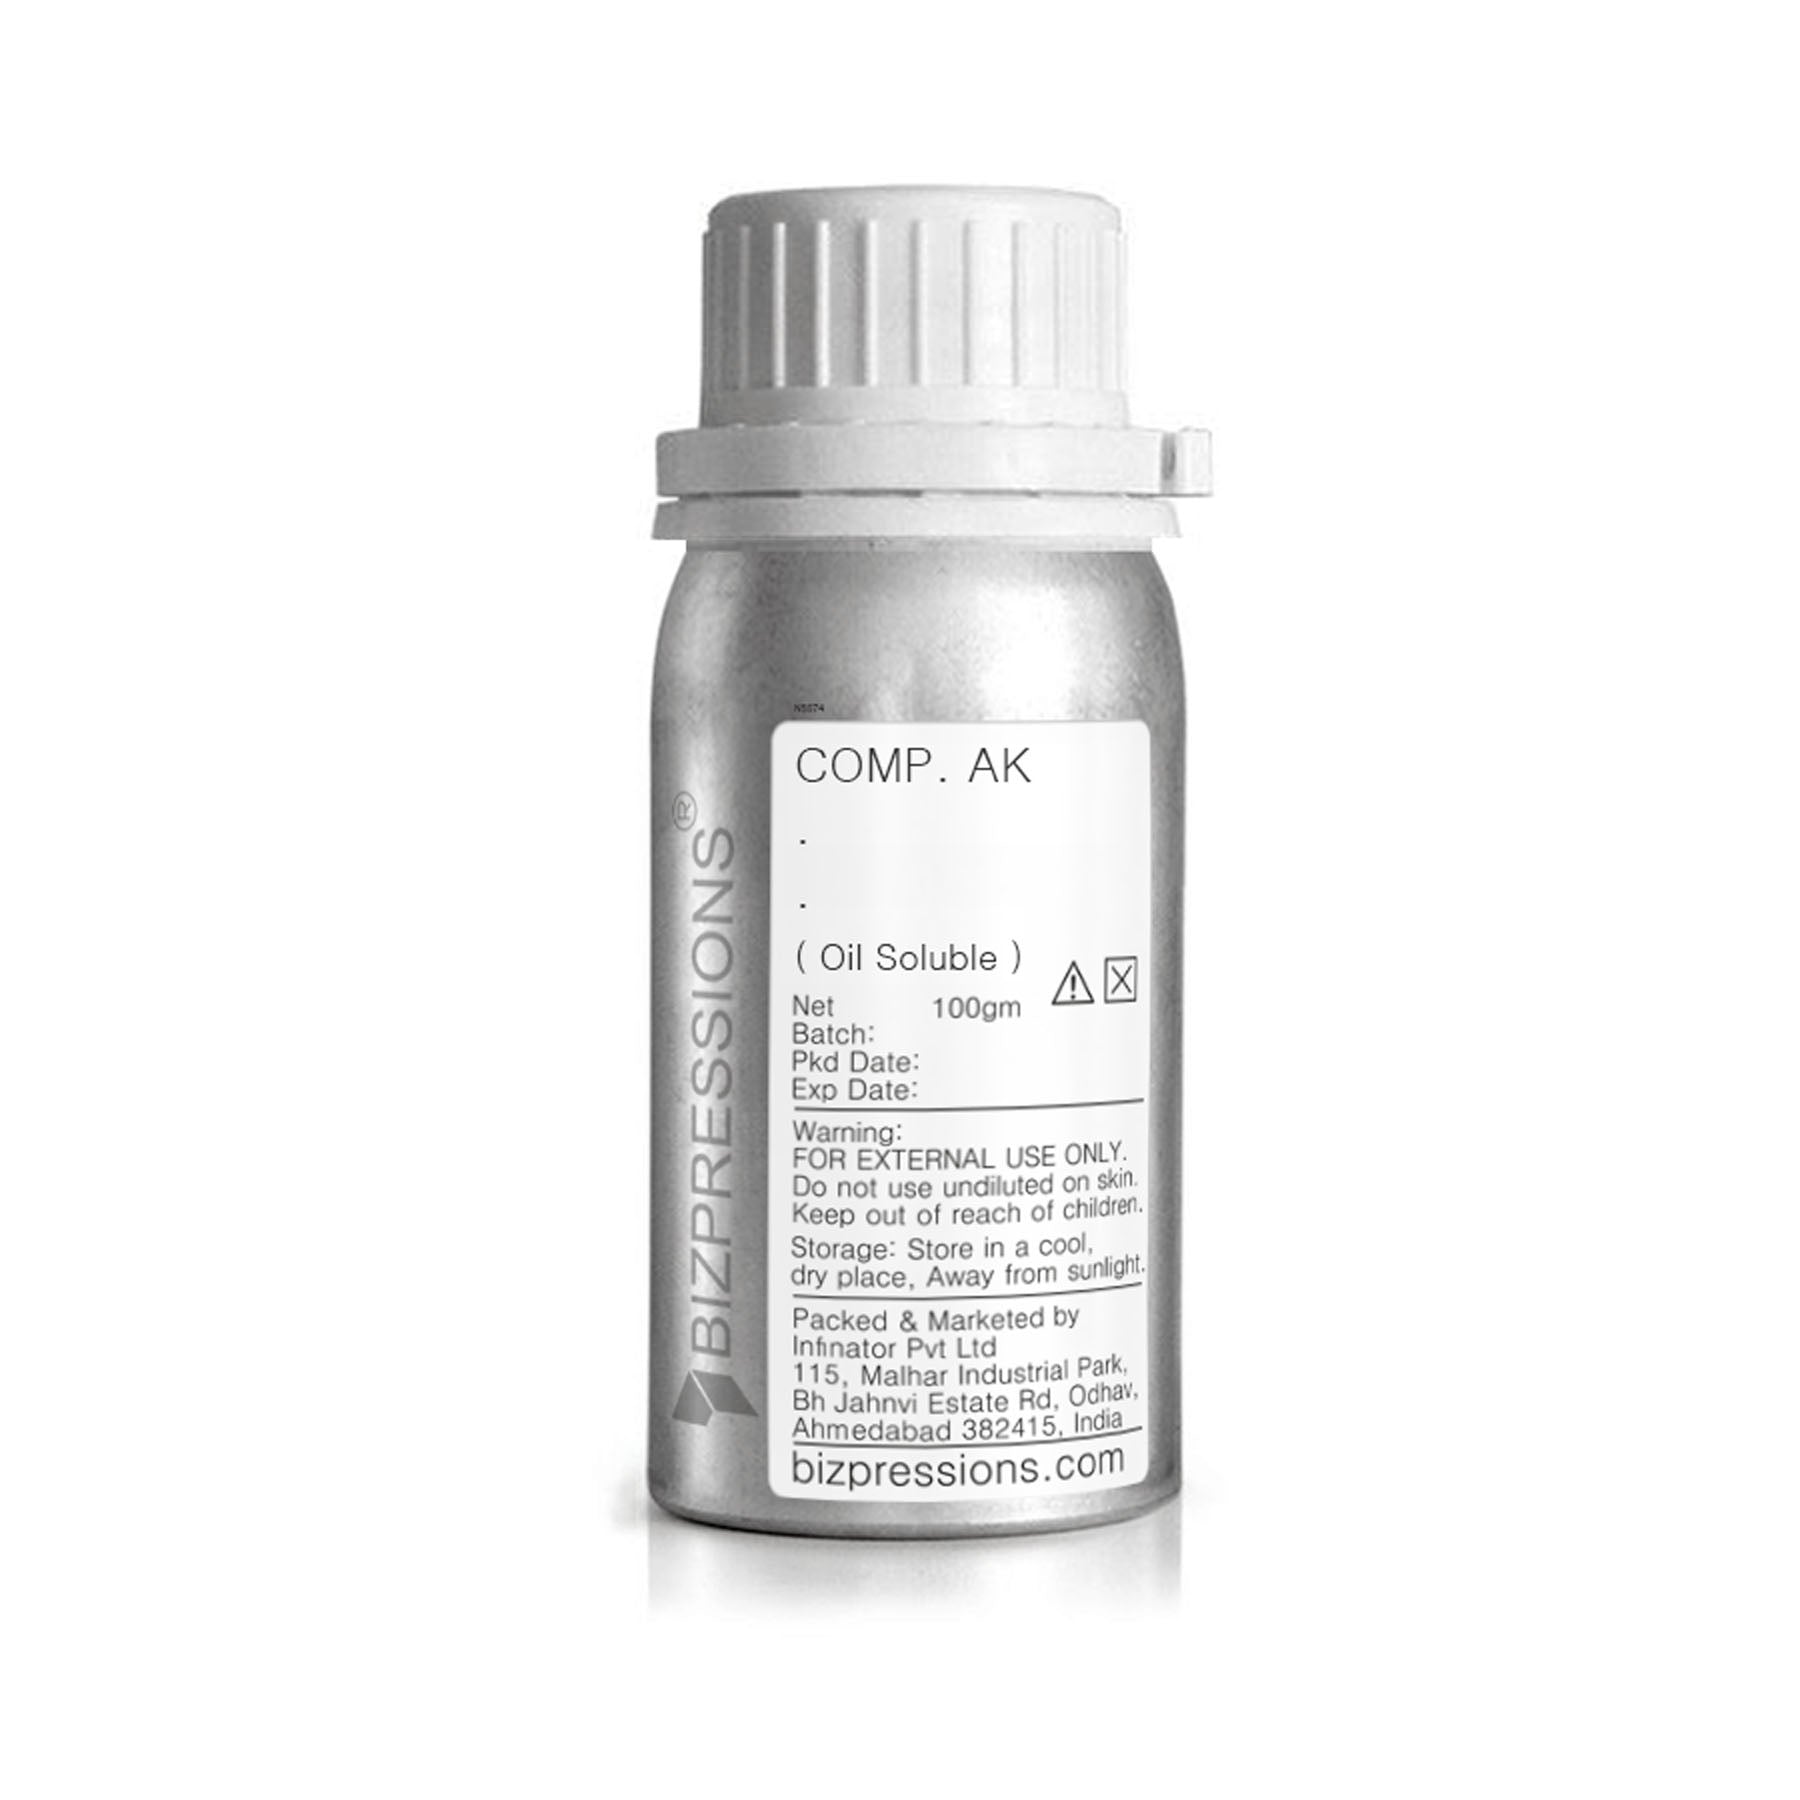 COMP. AK - Fragrance ( Oil Soluble ) - 100 gm